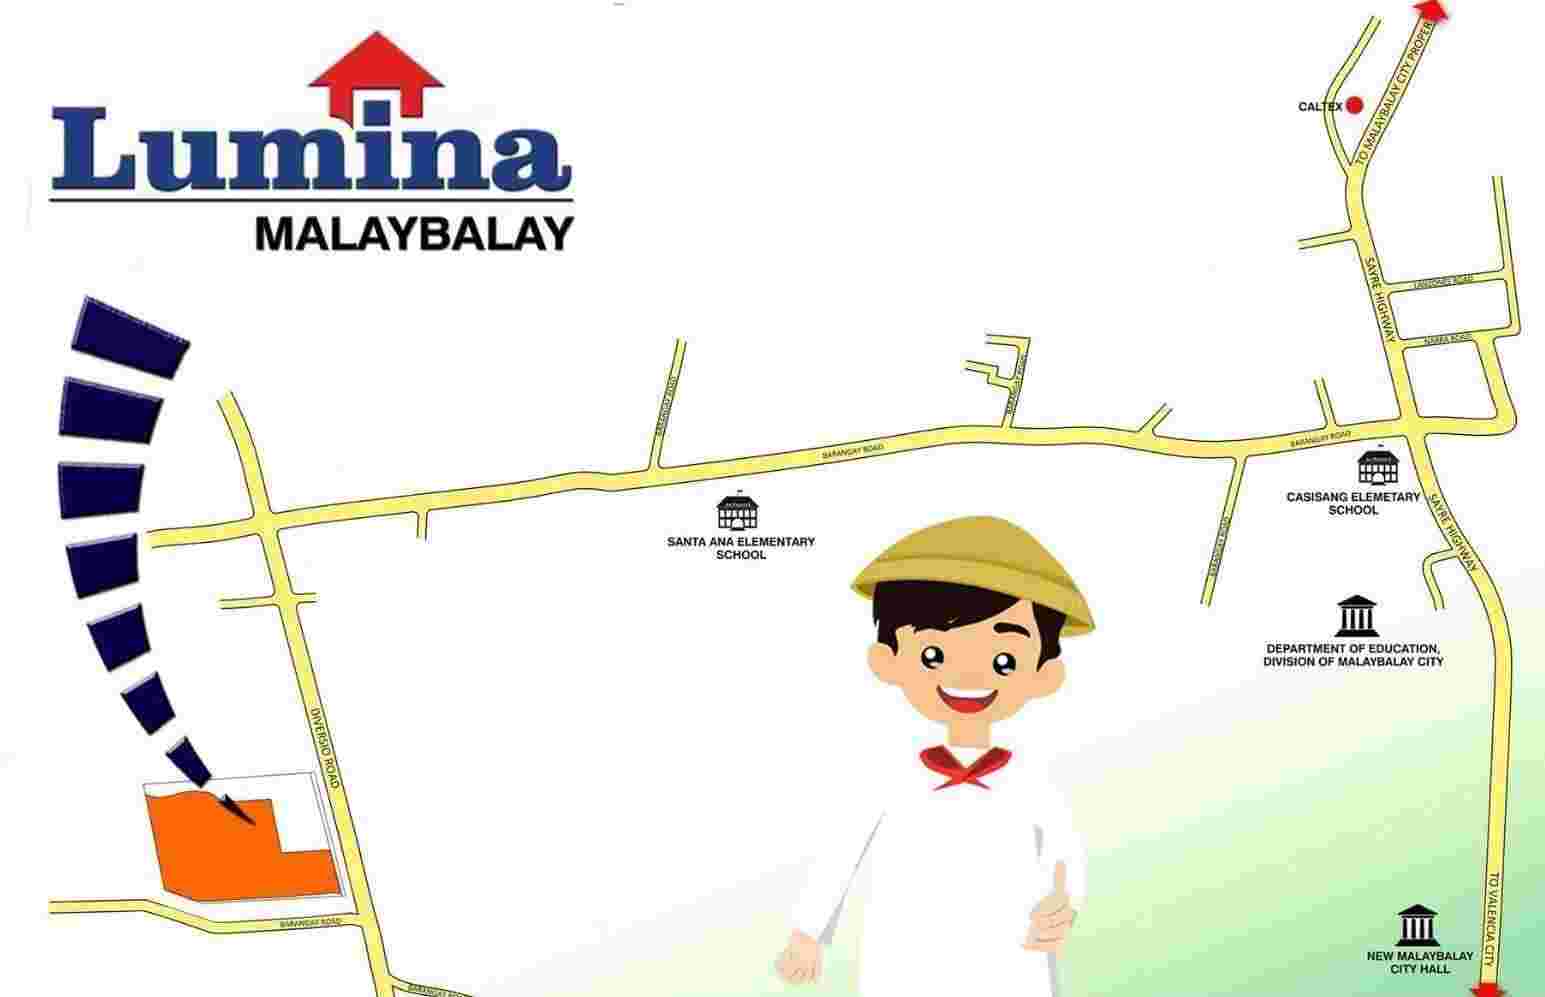 Lumina-Malaybalay-1639384276.jpg